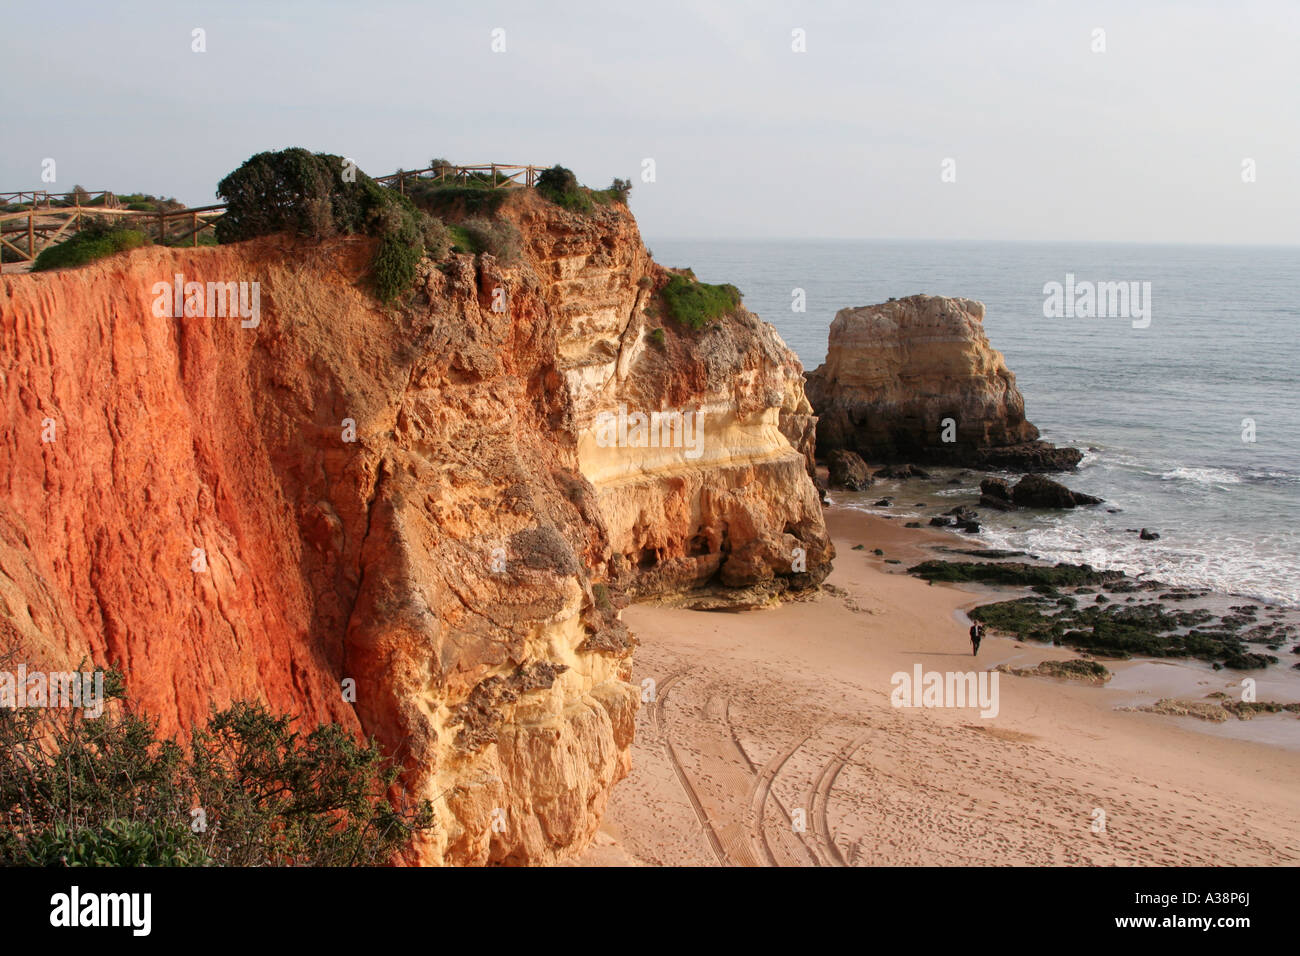 Golden cliffs rock formation Praia da Rocha Portimao Algarve Portugal Stock Photo